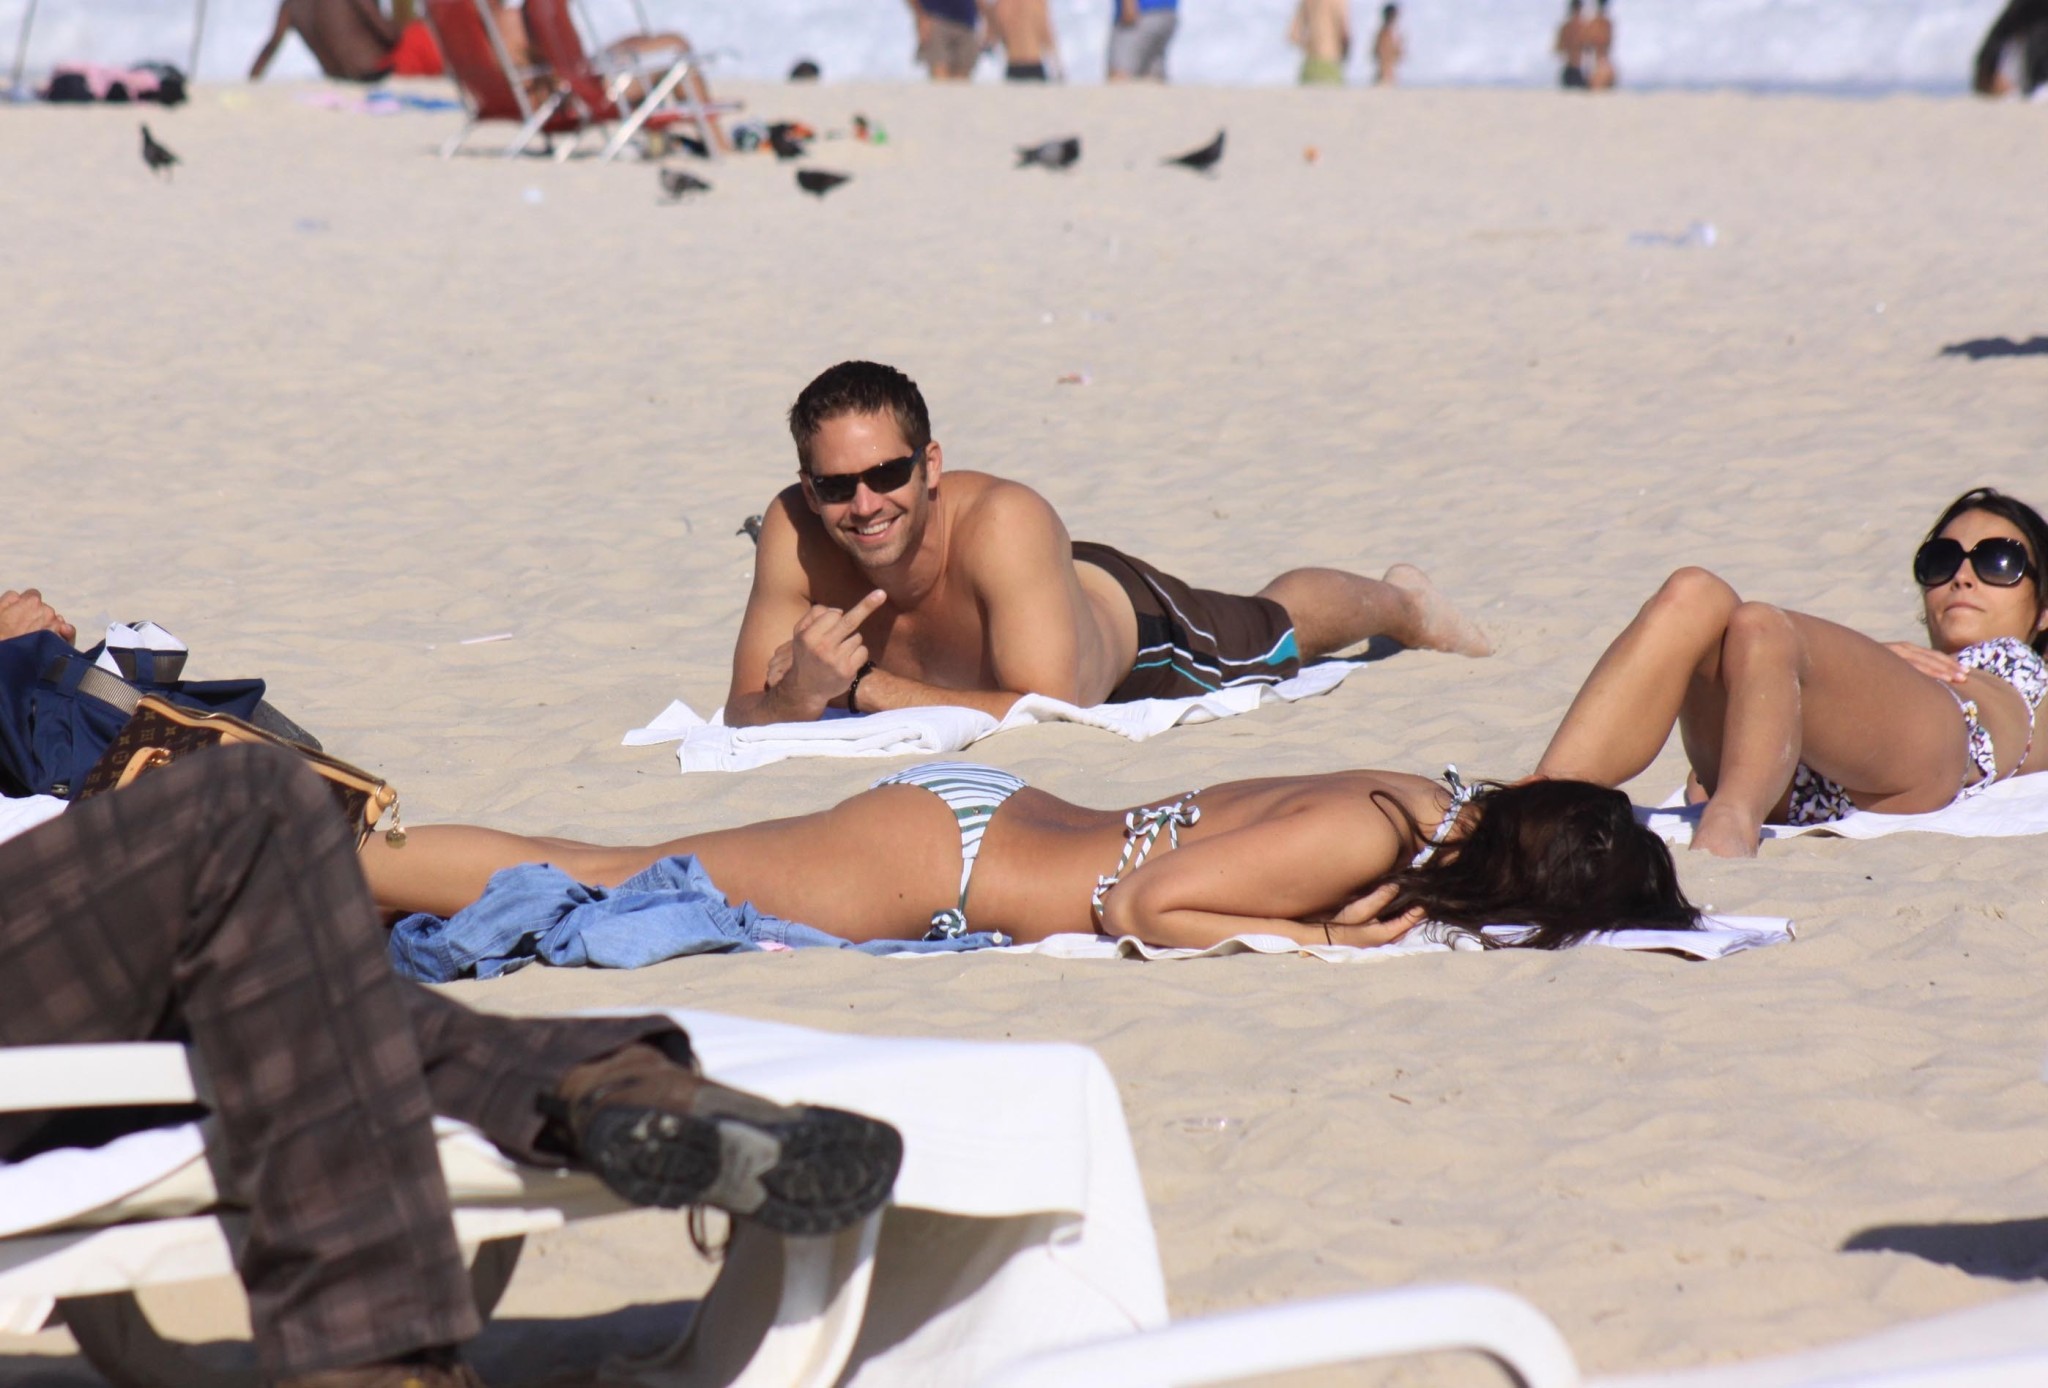 Jordana brewster con un bikini sexy en la playa de rio de janeiro
 #75327640